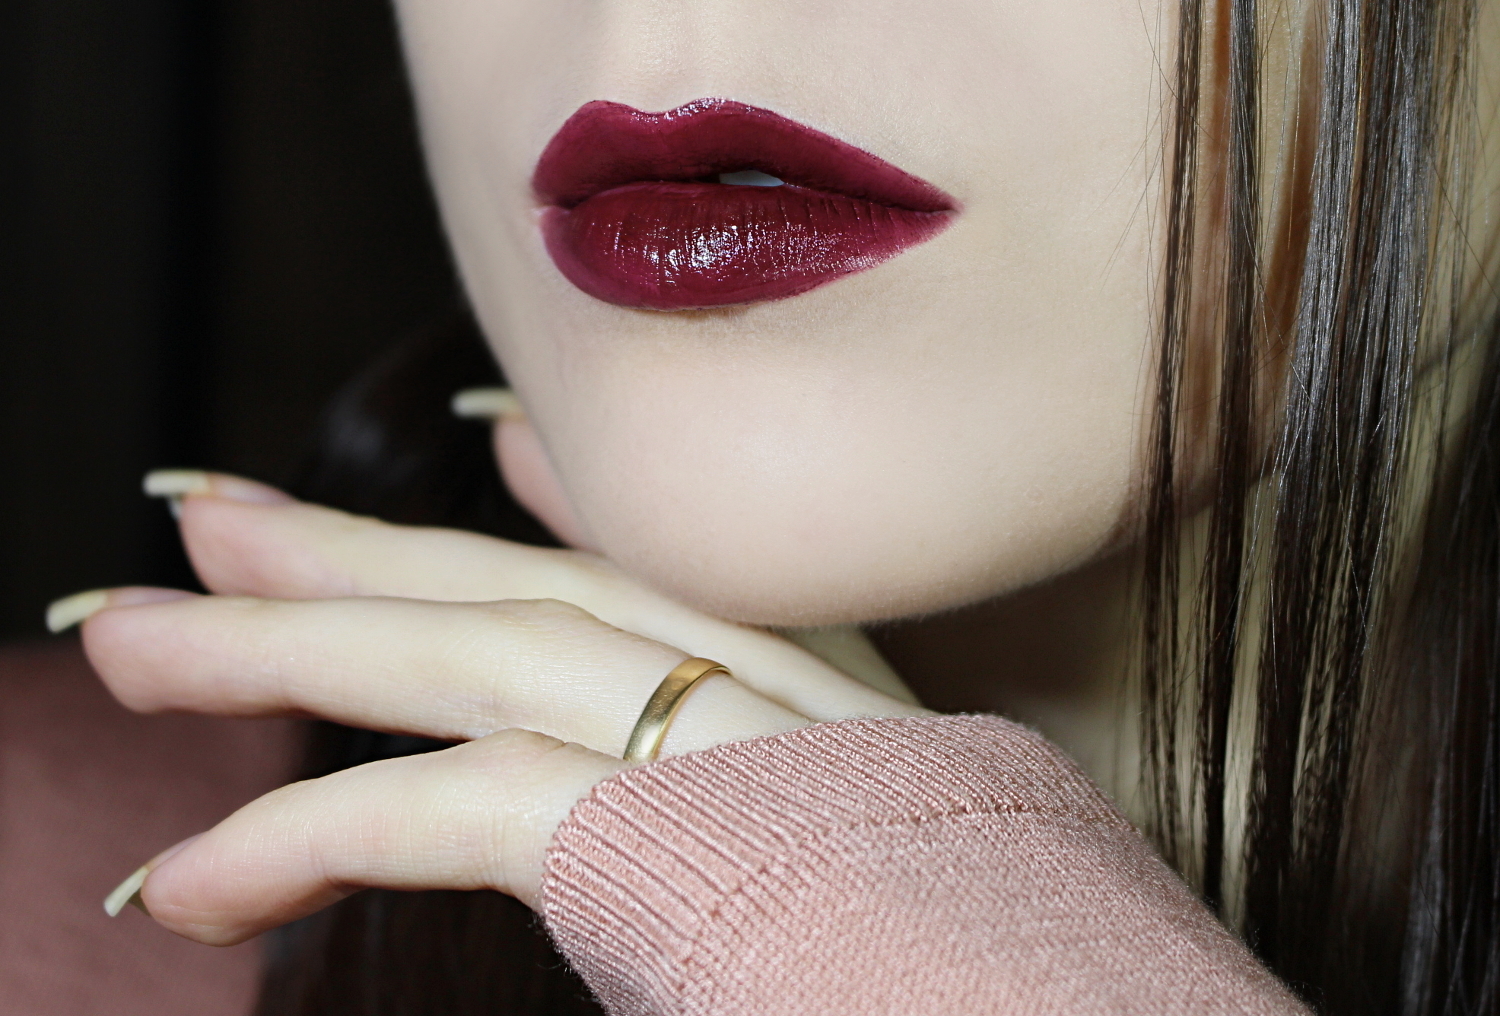 chocolate burgundy lipstick - OFF-58% > Shipping free